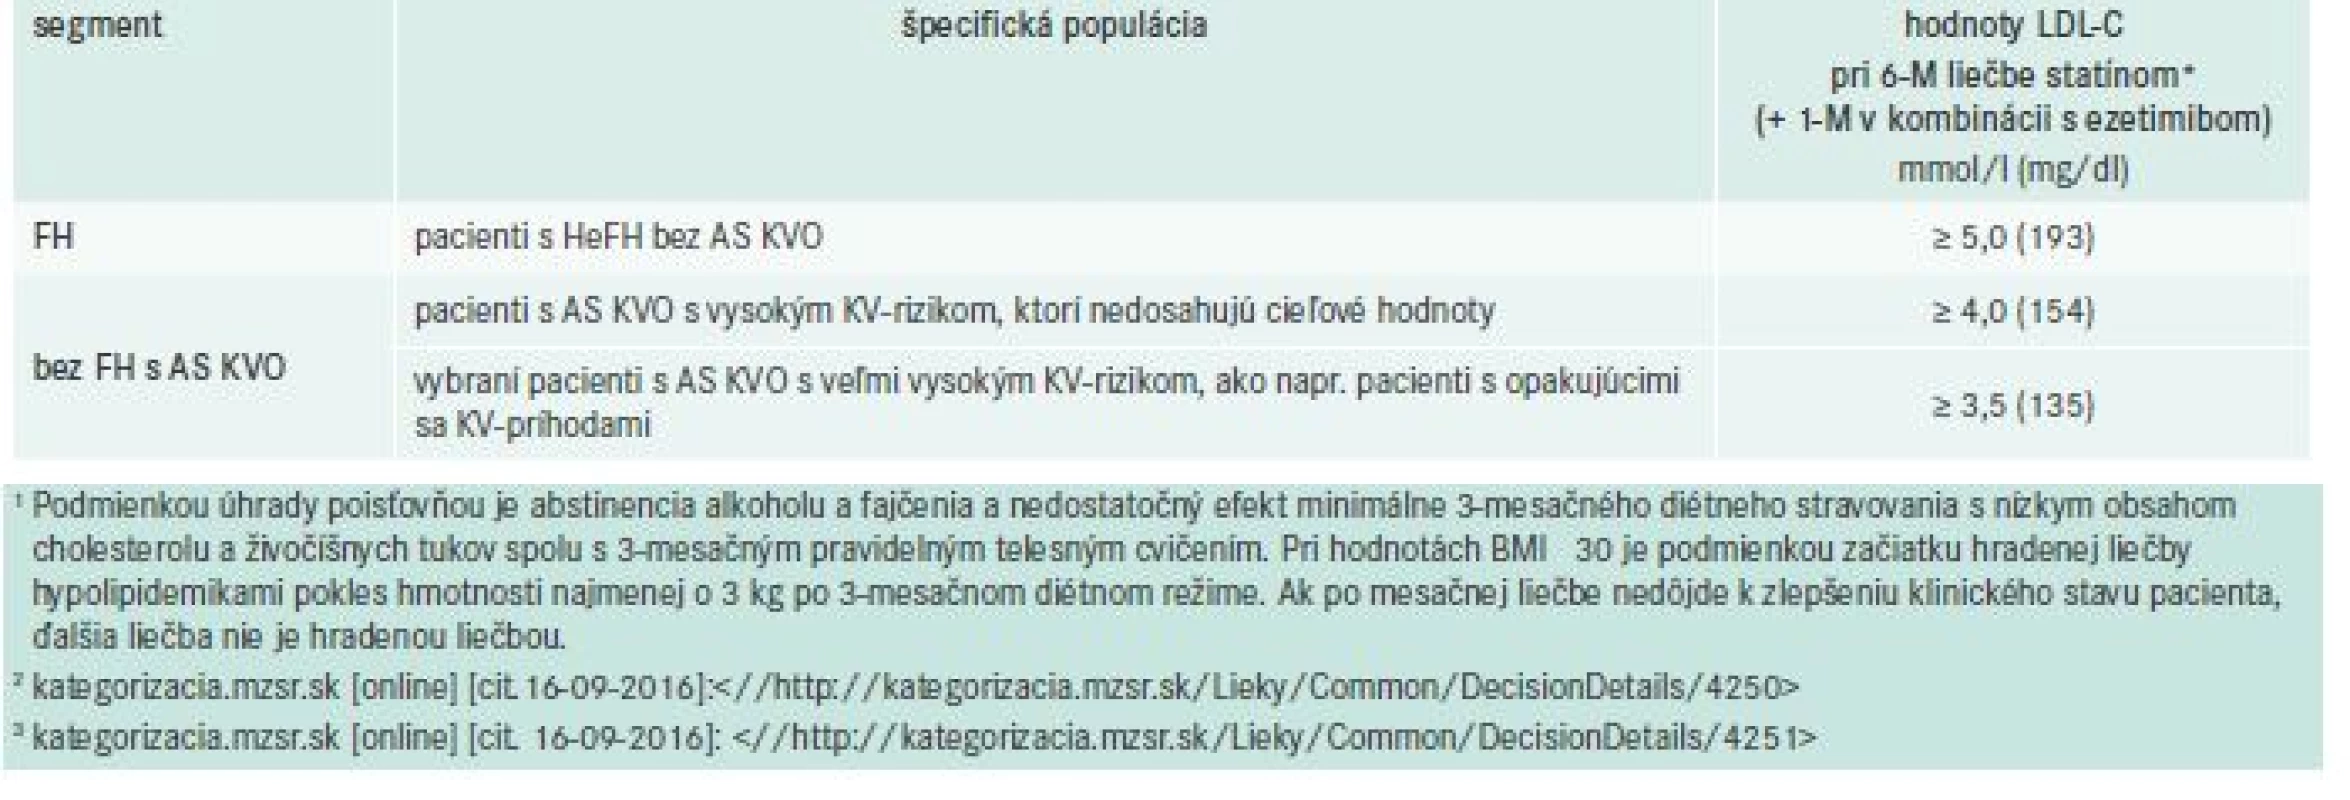 Podmienky úhrady liečby PCSK9 inhibítormi na Slovensku po schválení poisťovňou*